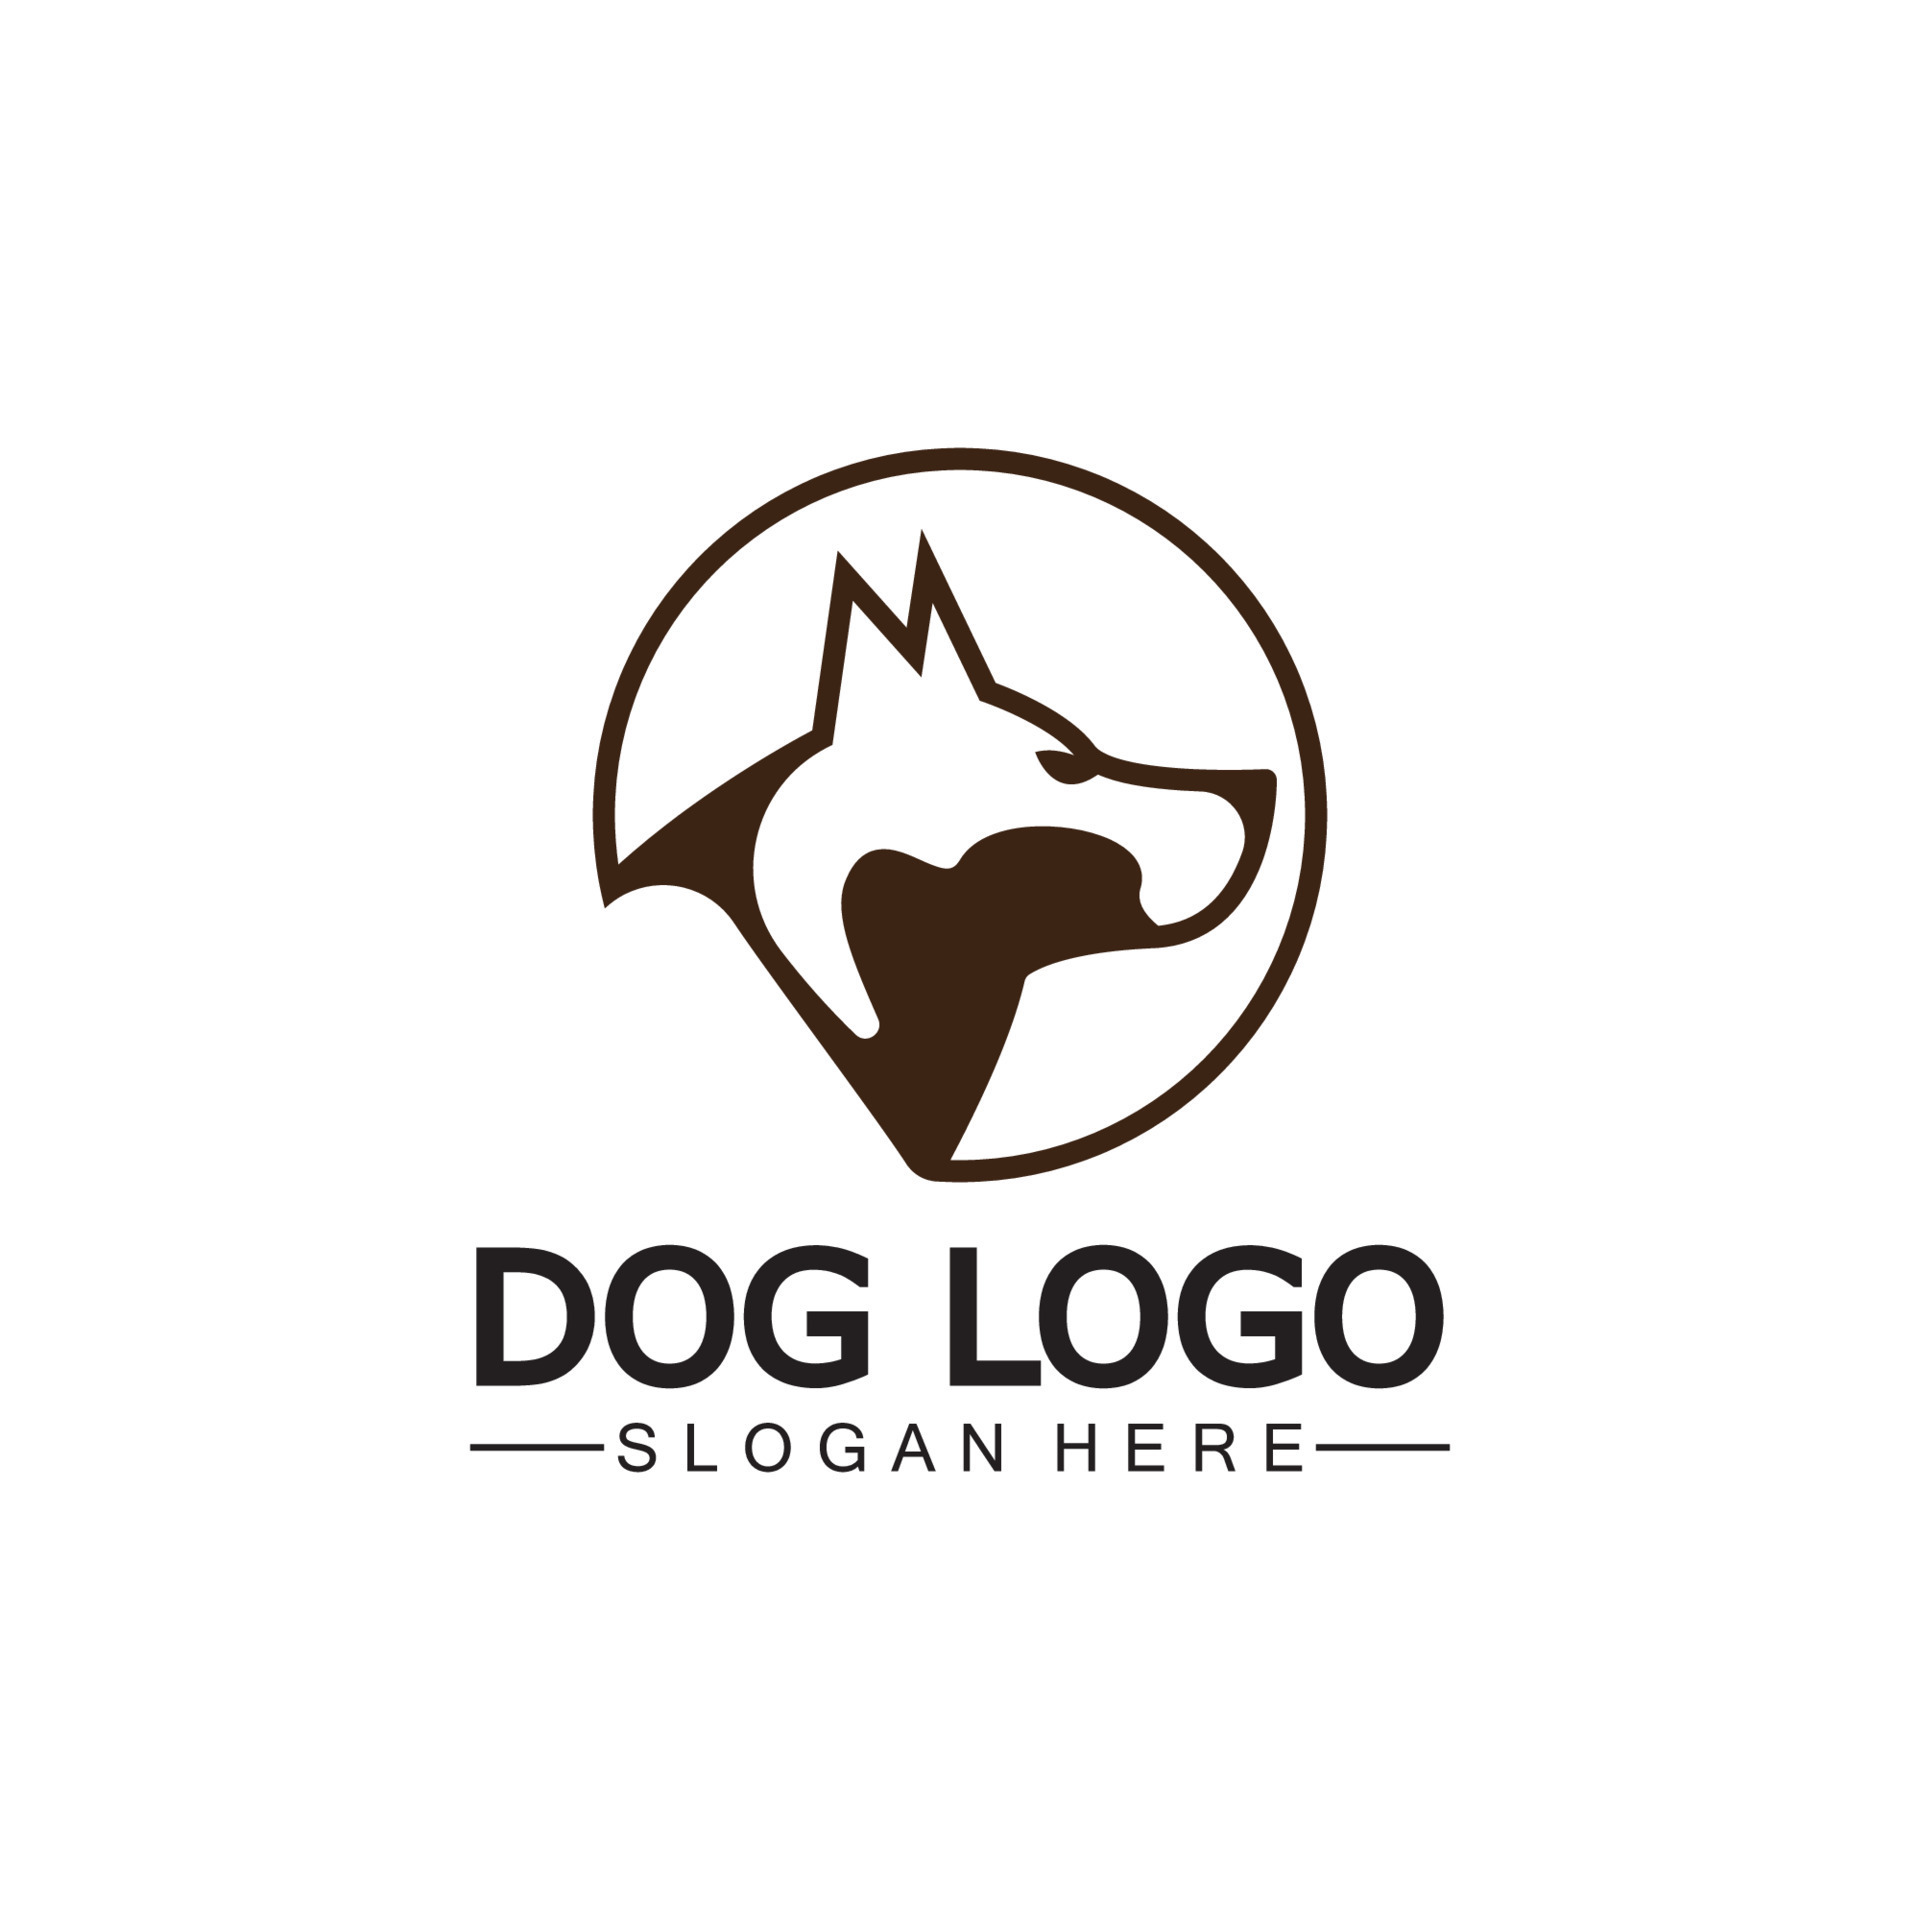 Dog logo and icon design vector illustration 20200405 Vector Art at ...